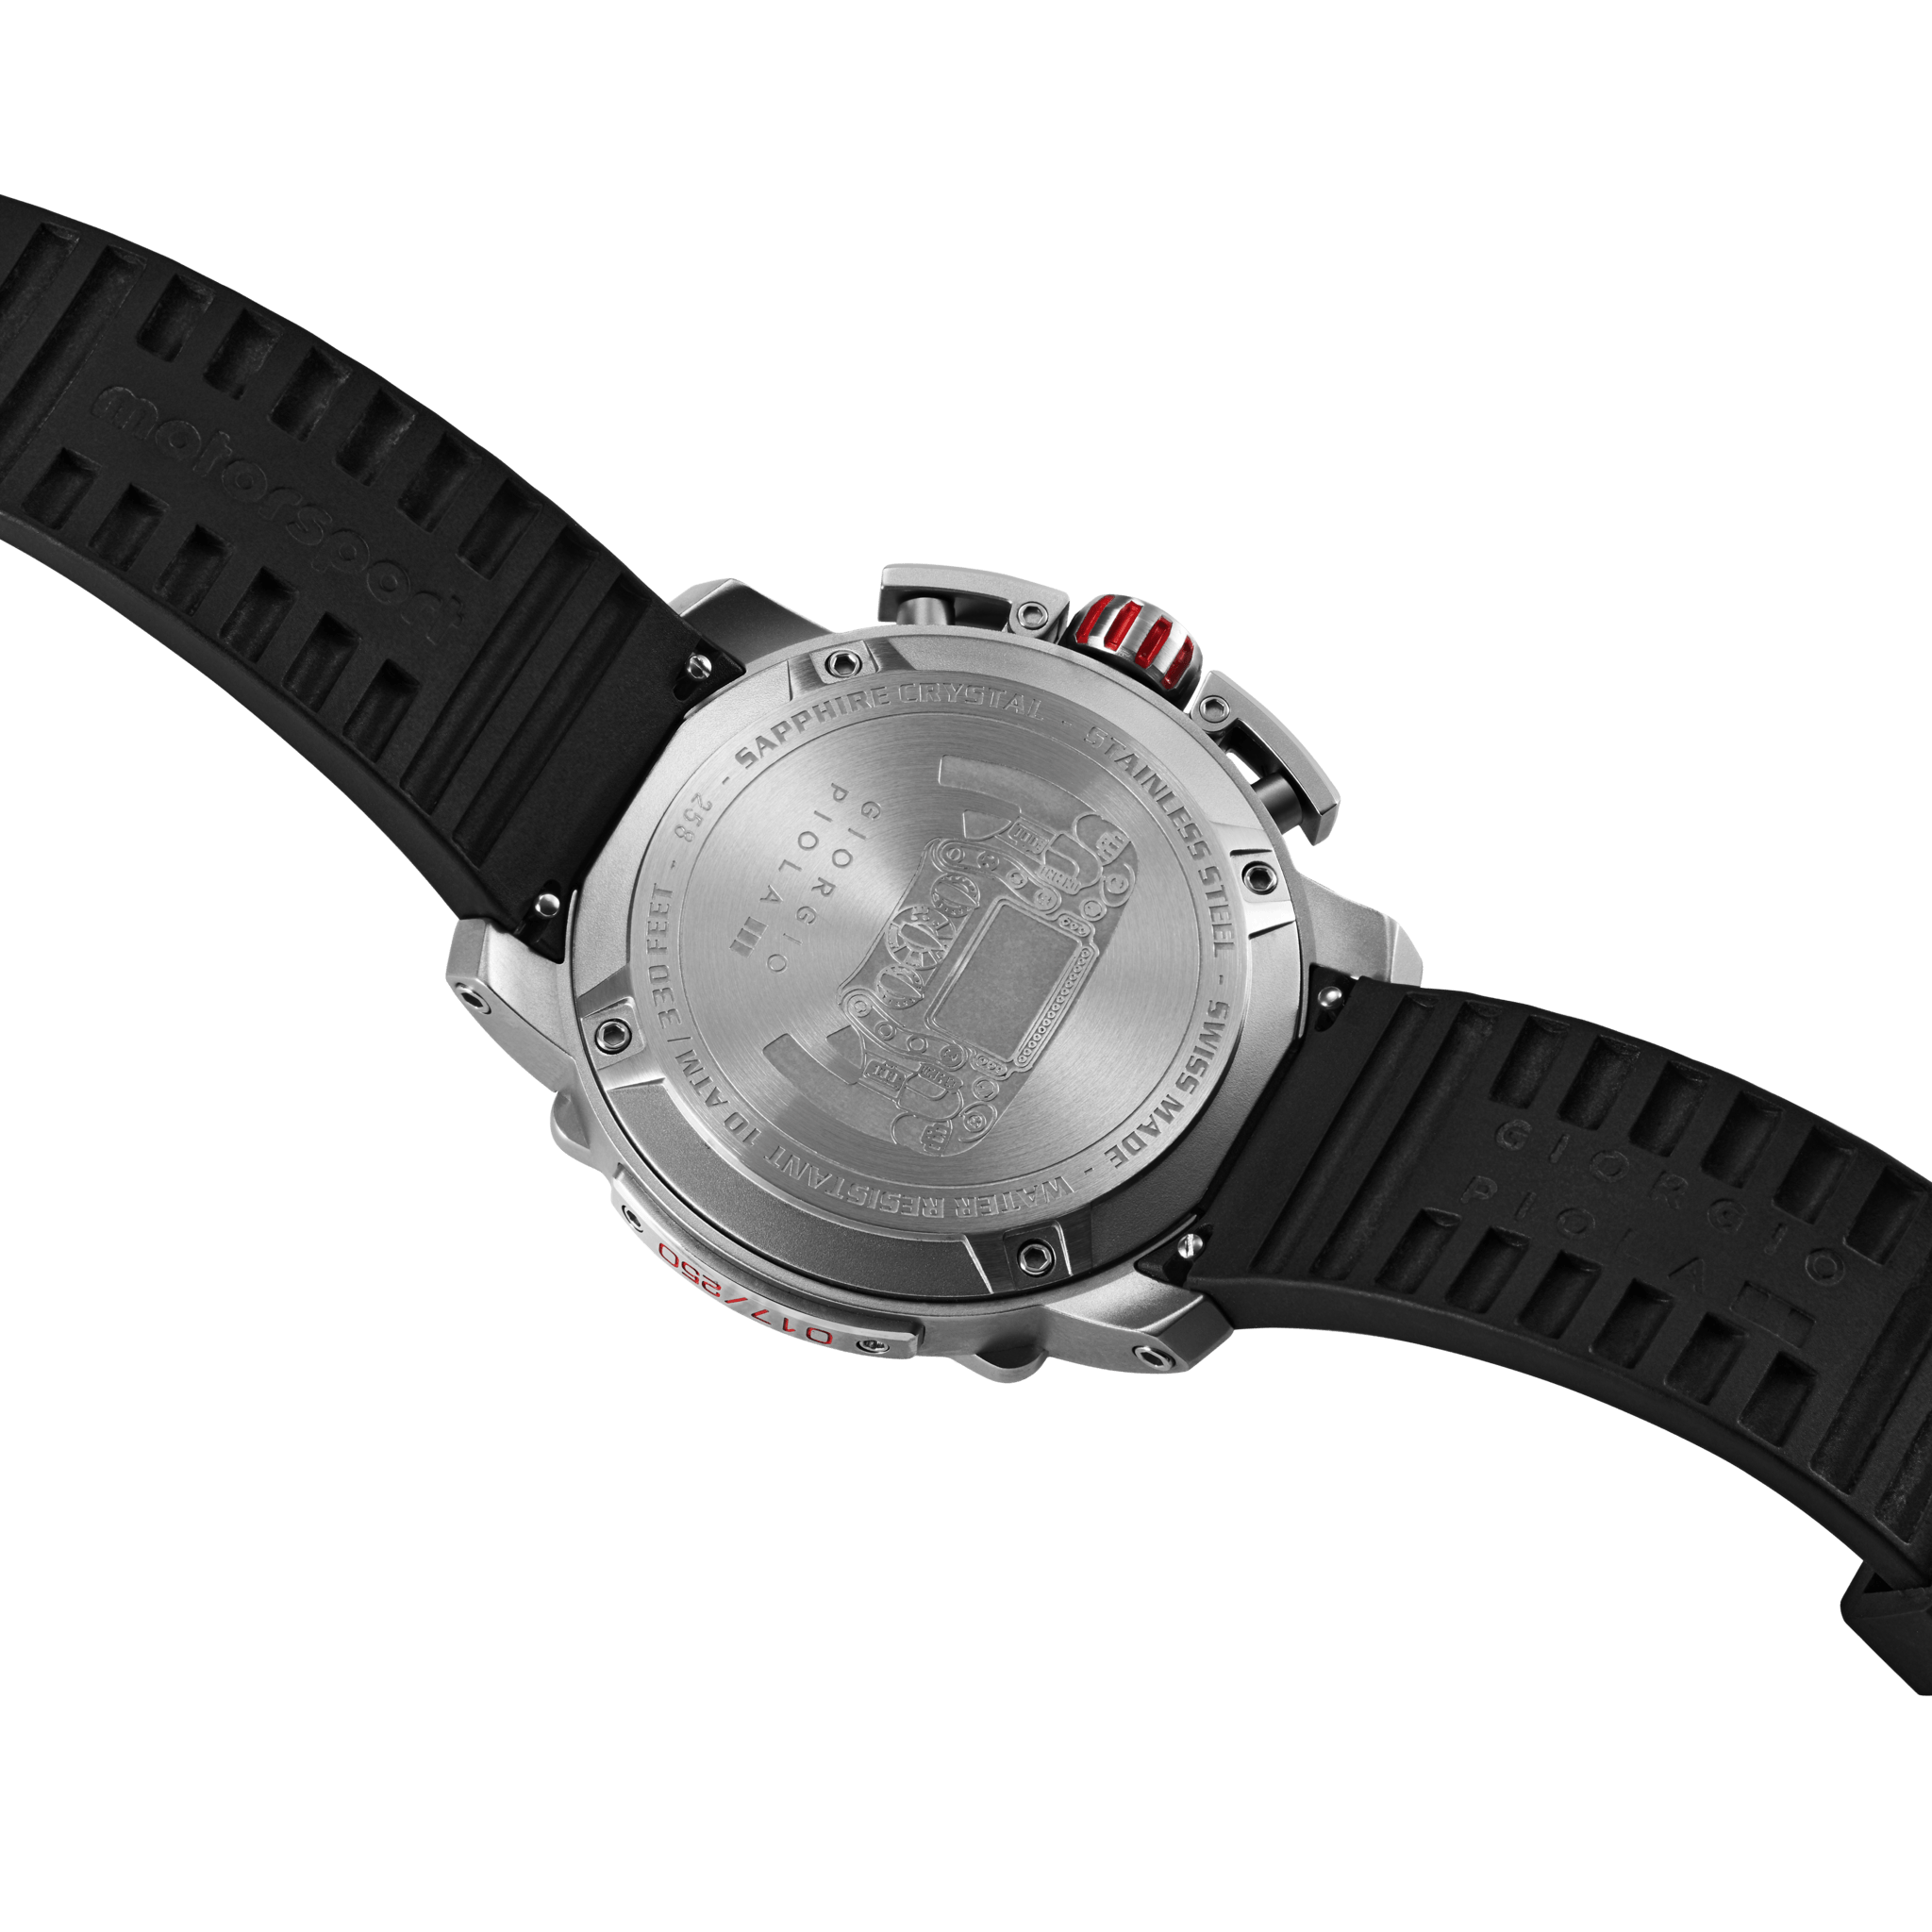 Torque - Black Stainless Steel Swiss Sport Chrono Watch